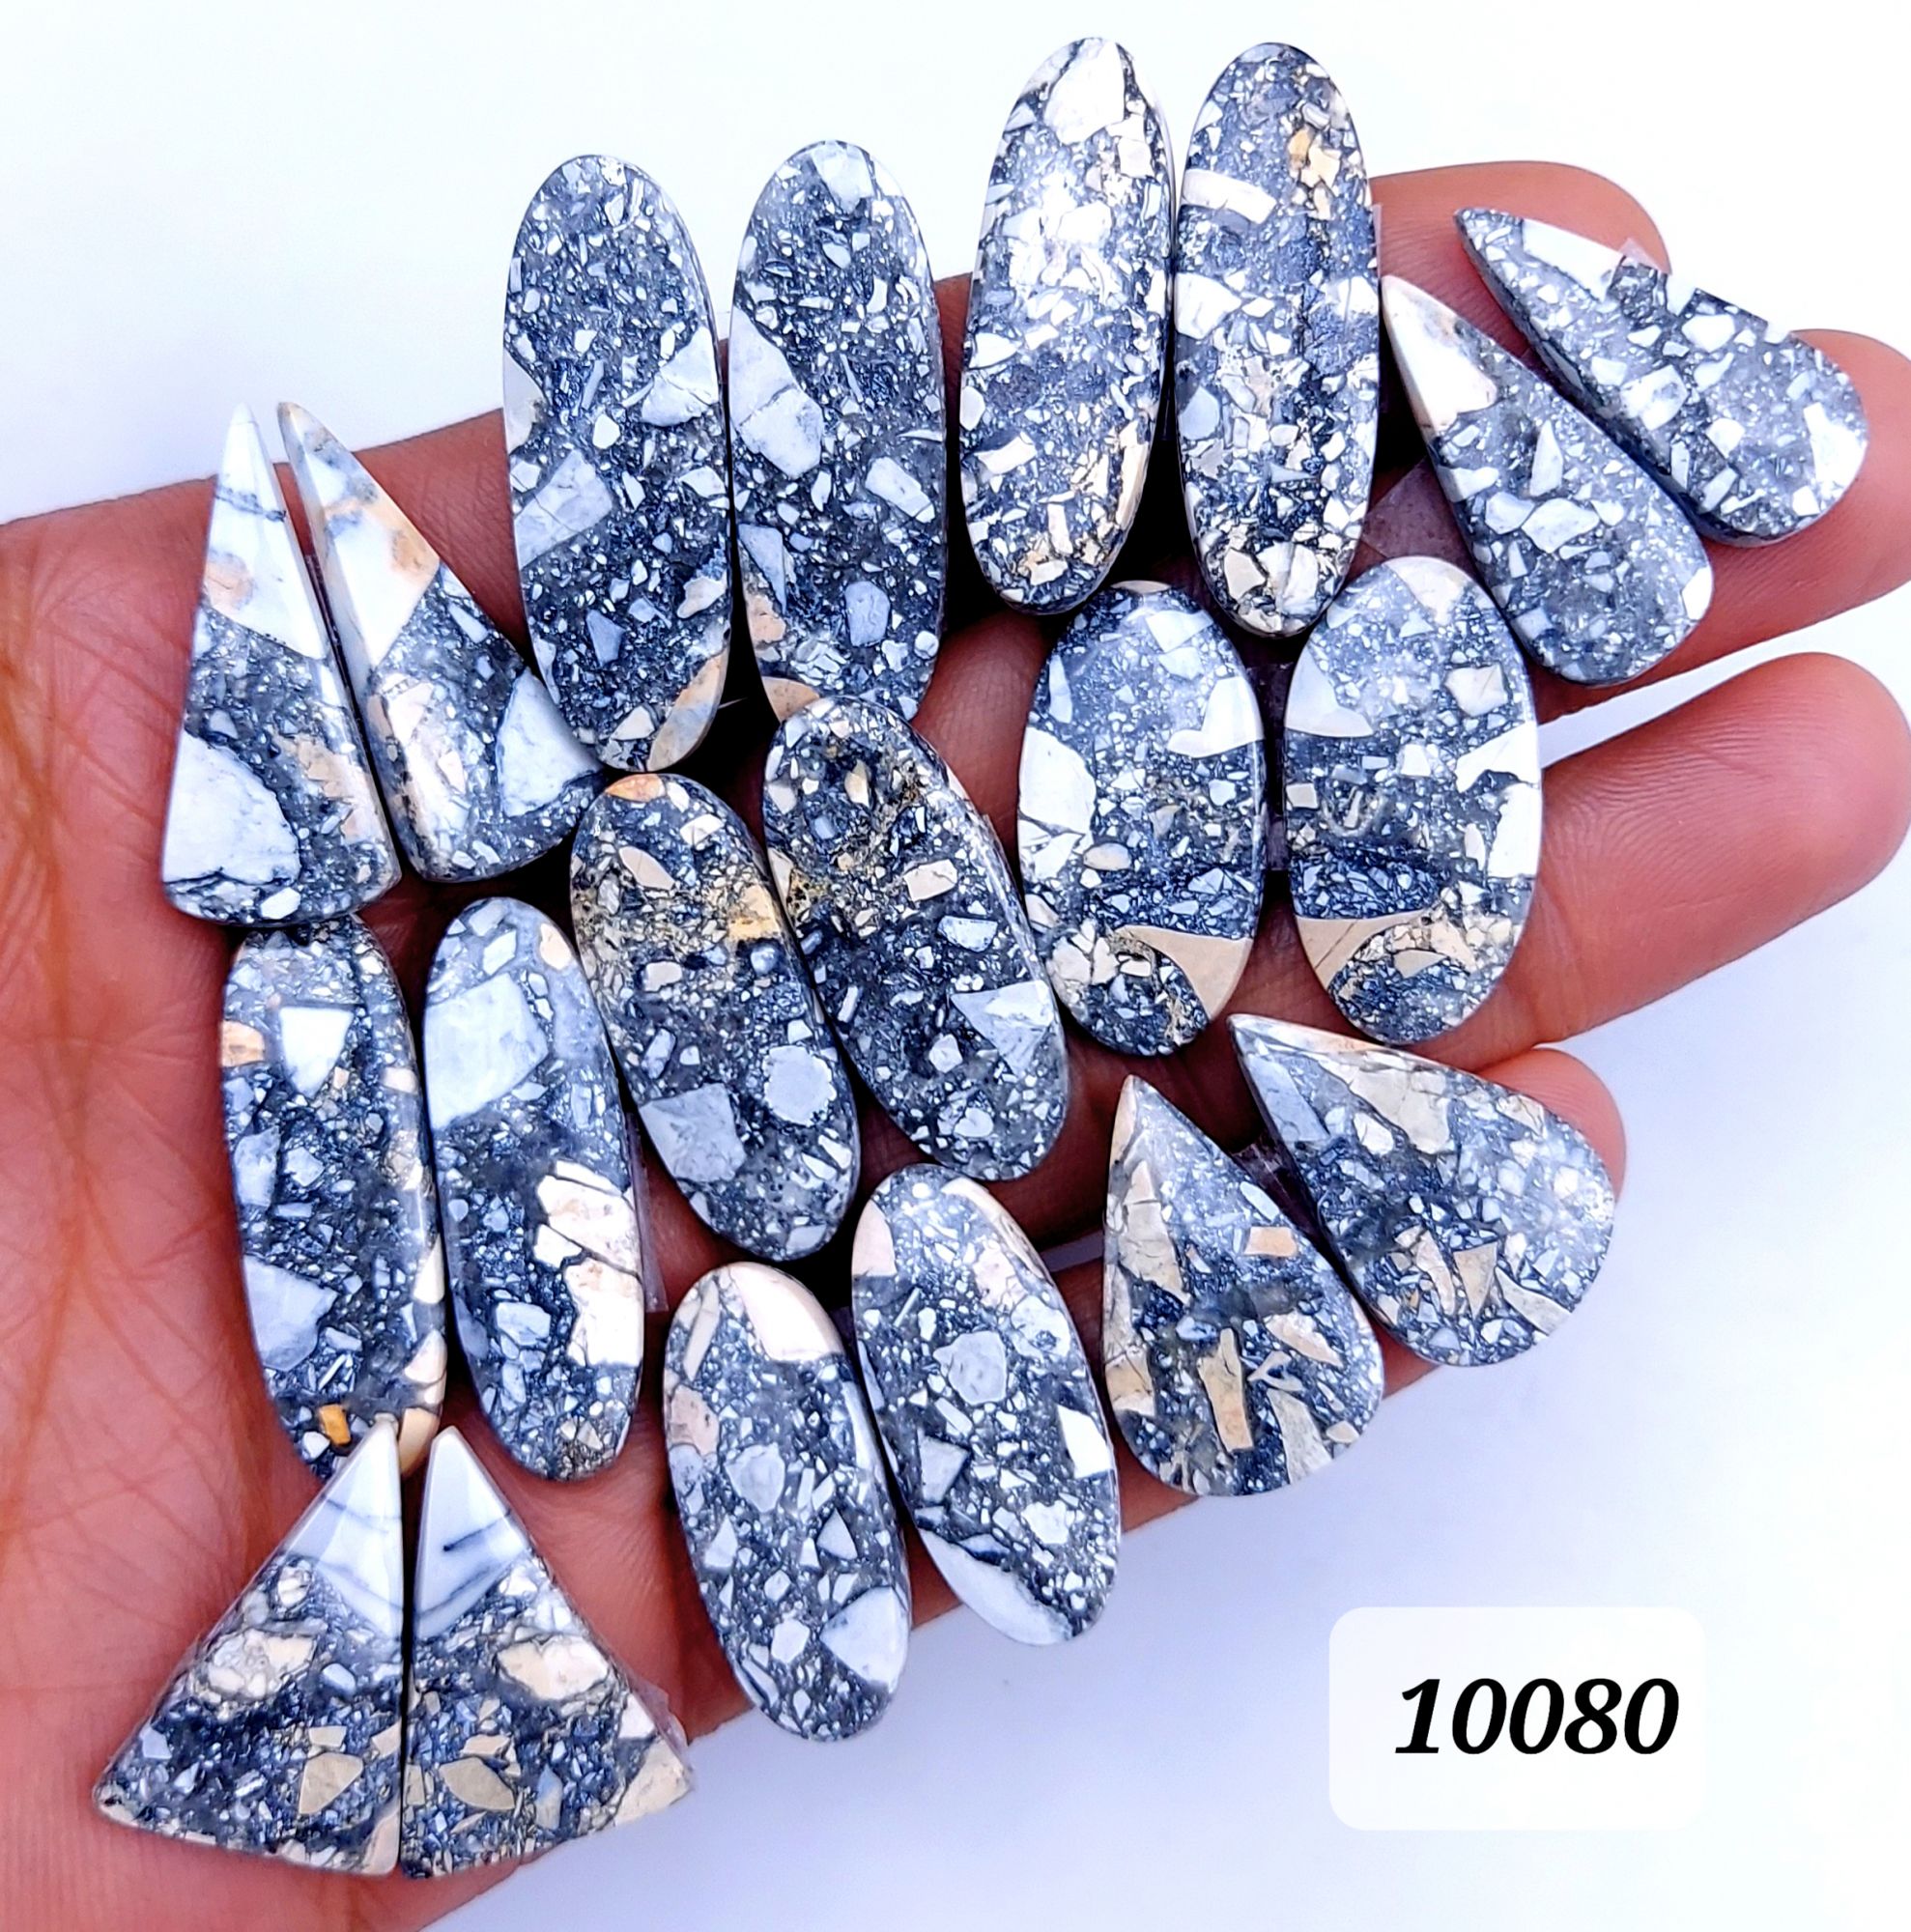 10Pcs 319Cts Natural Maligano Jasper Cabochon Pair Lot Back Side Unpolished Semi-Precious Gemstones For Jewelry Making 35x12 25x15mm #10080